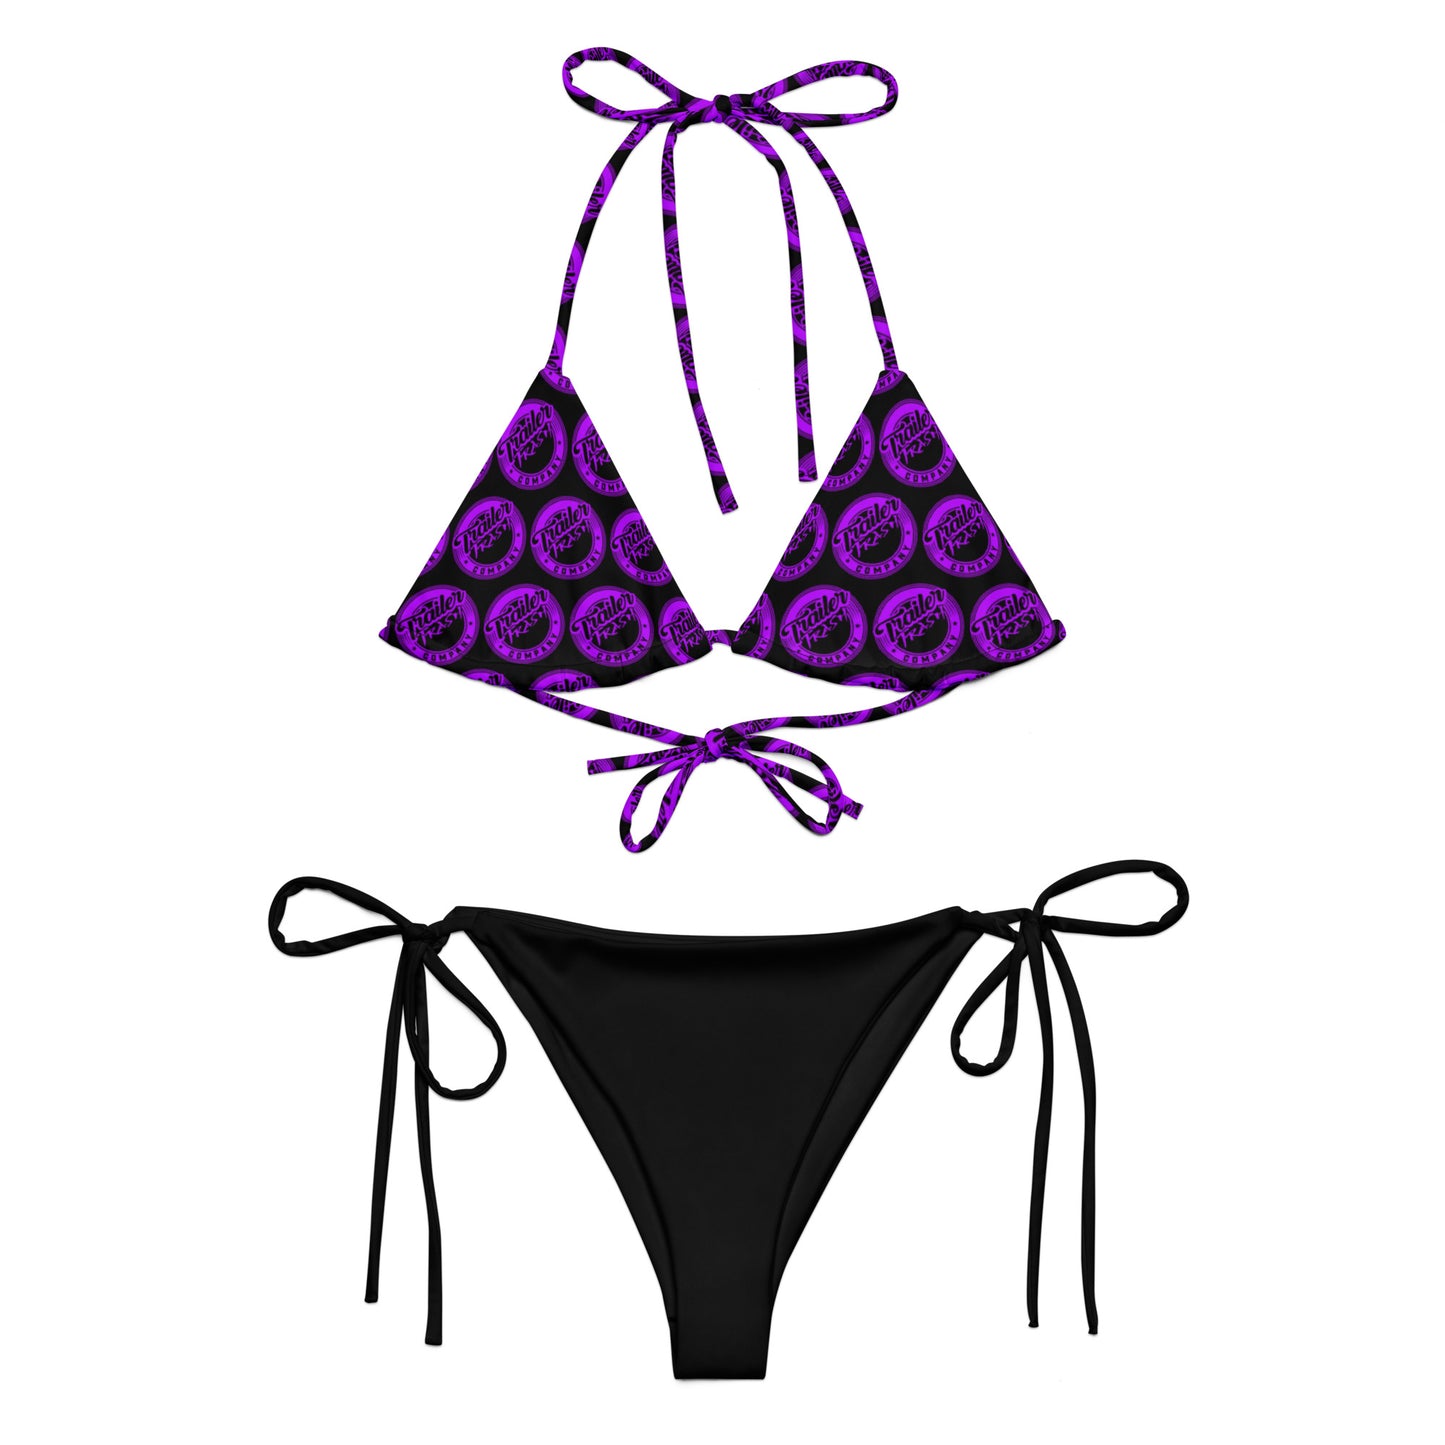 Trailer Trash Company String Bikini - Electric Purple